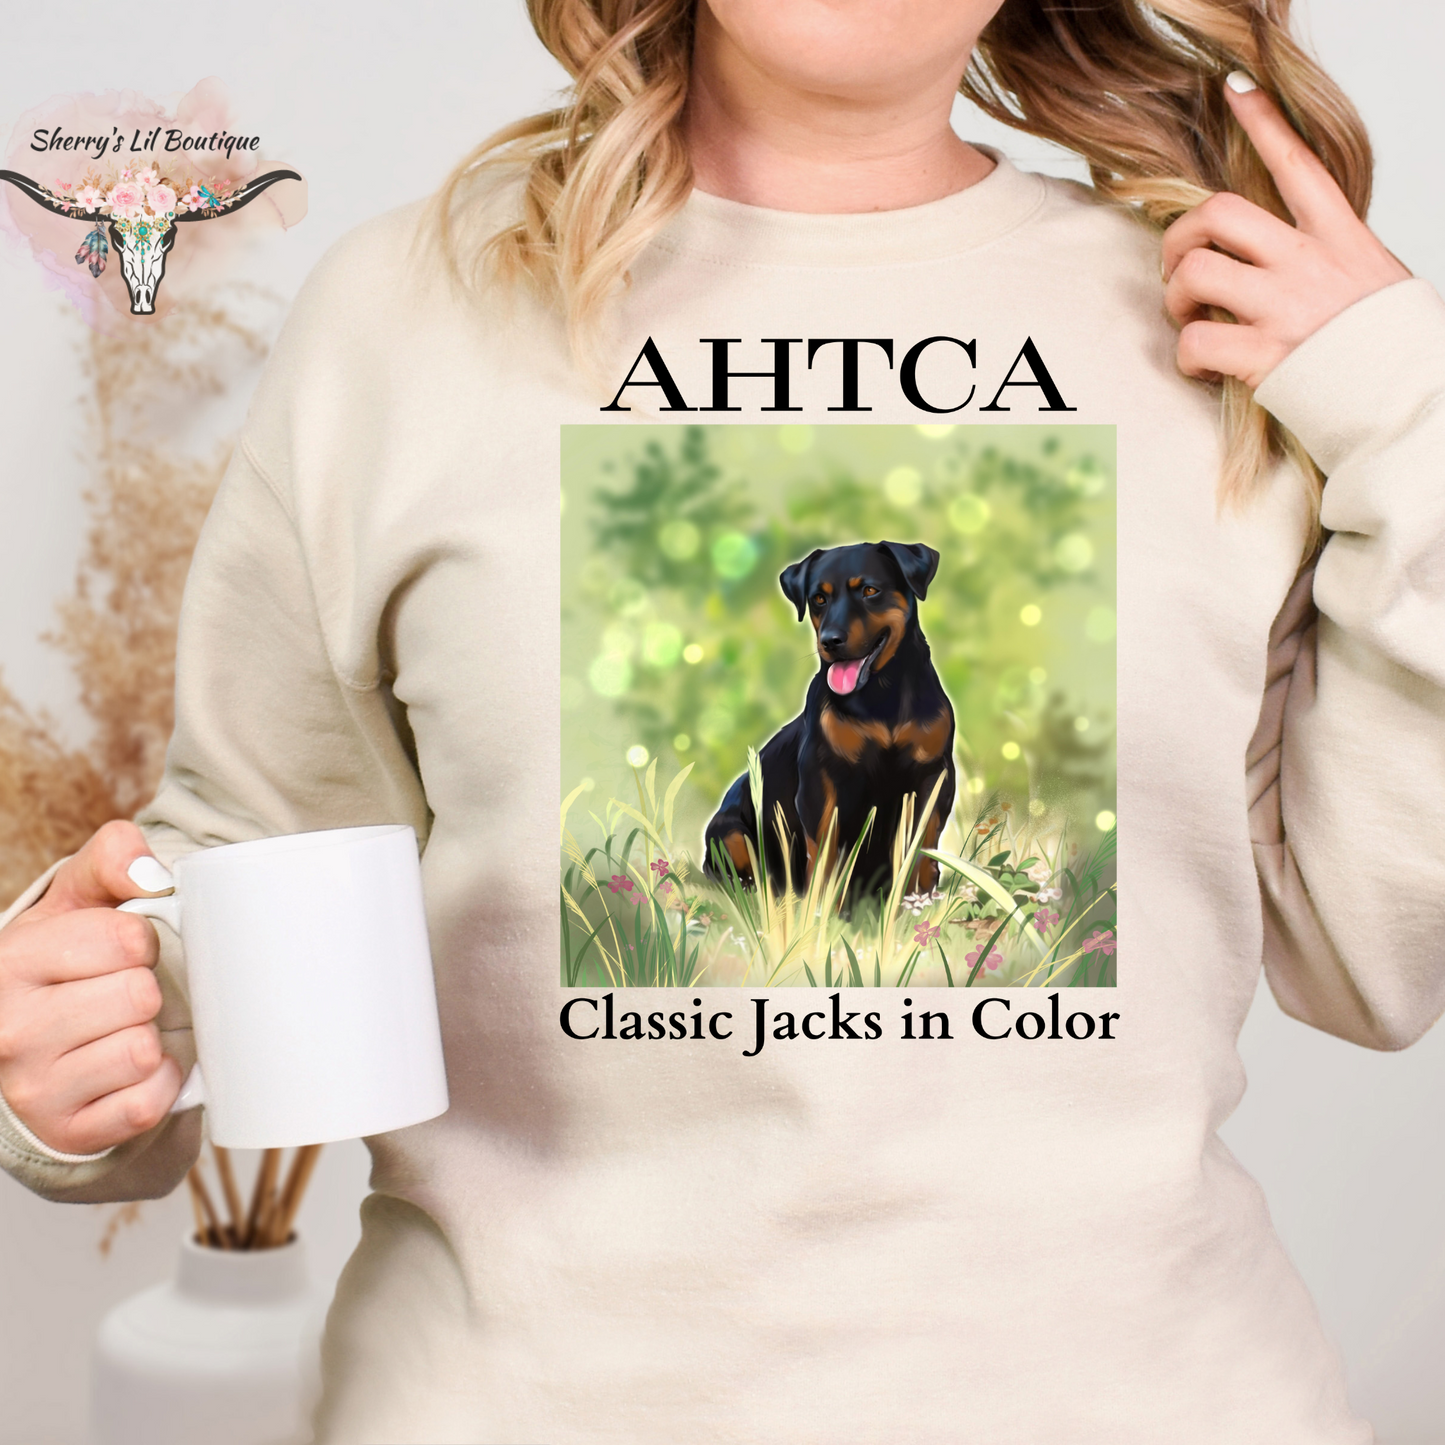 Sand sweatshirt with AHTCA graphic design